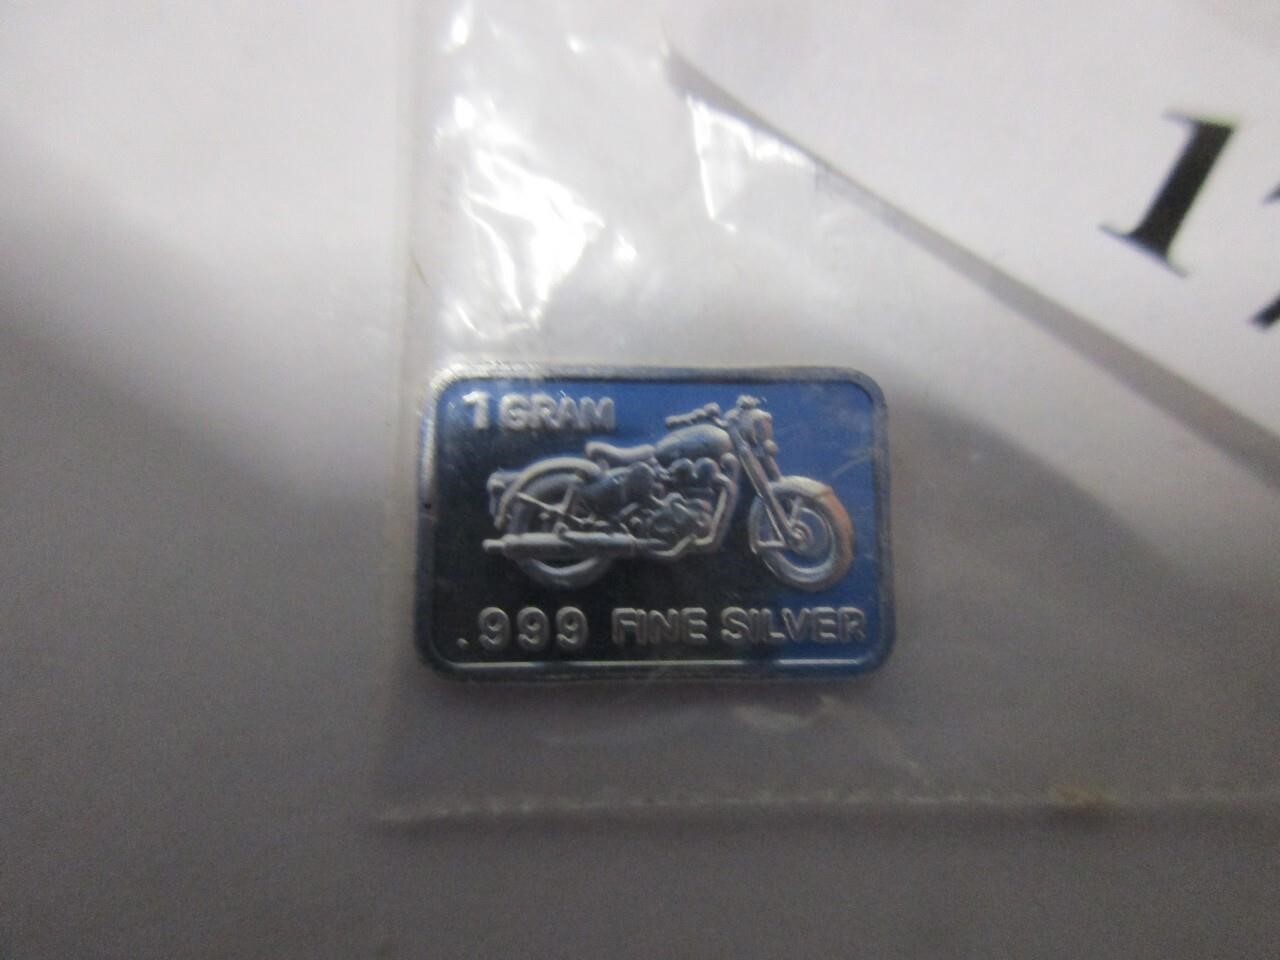 1 gram bar of .999 fine silver